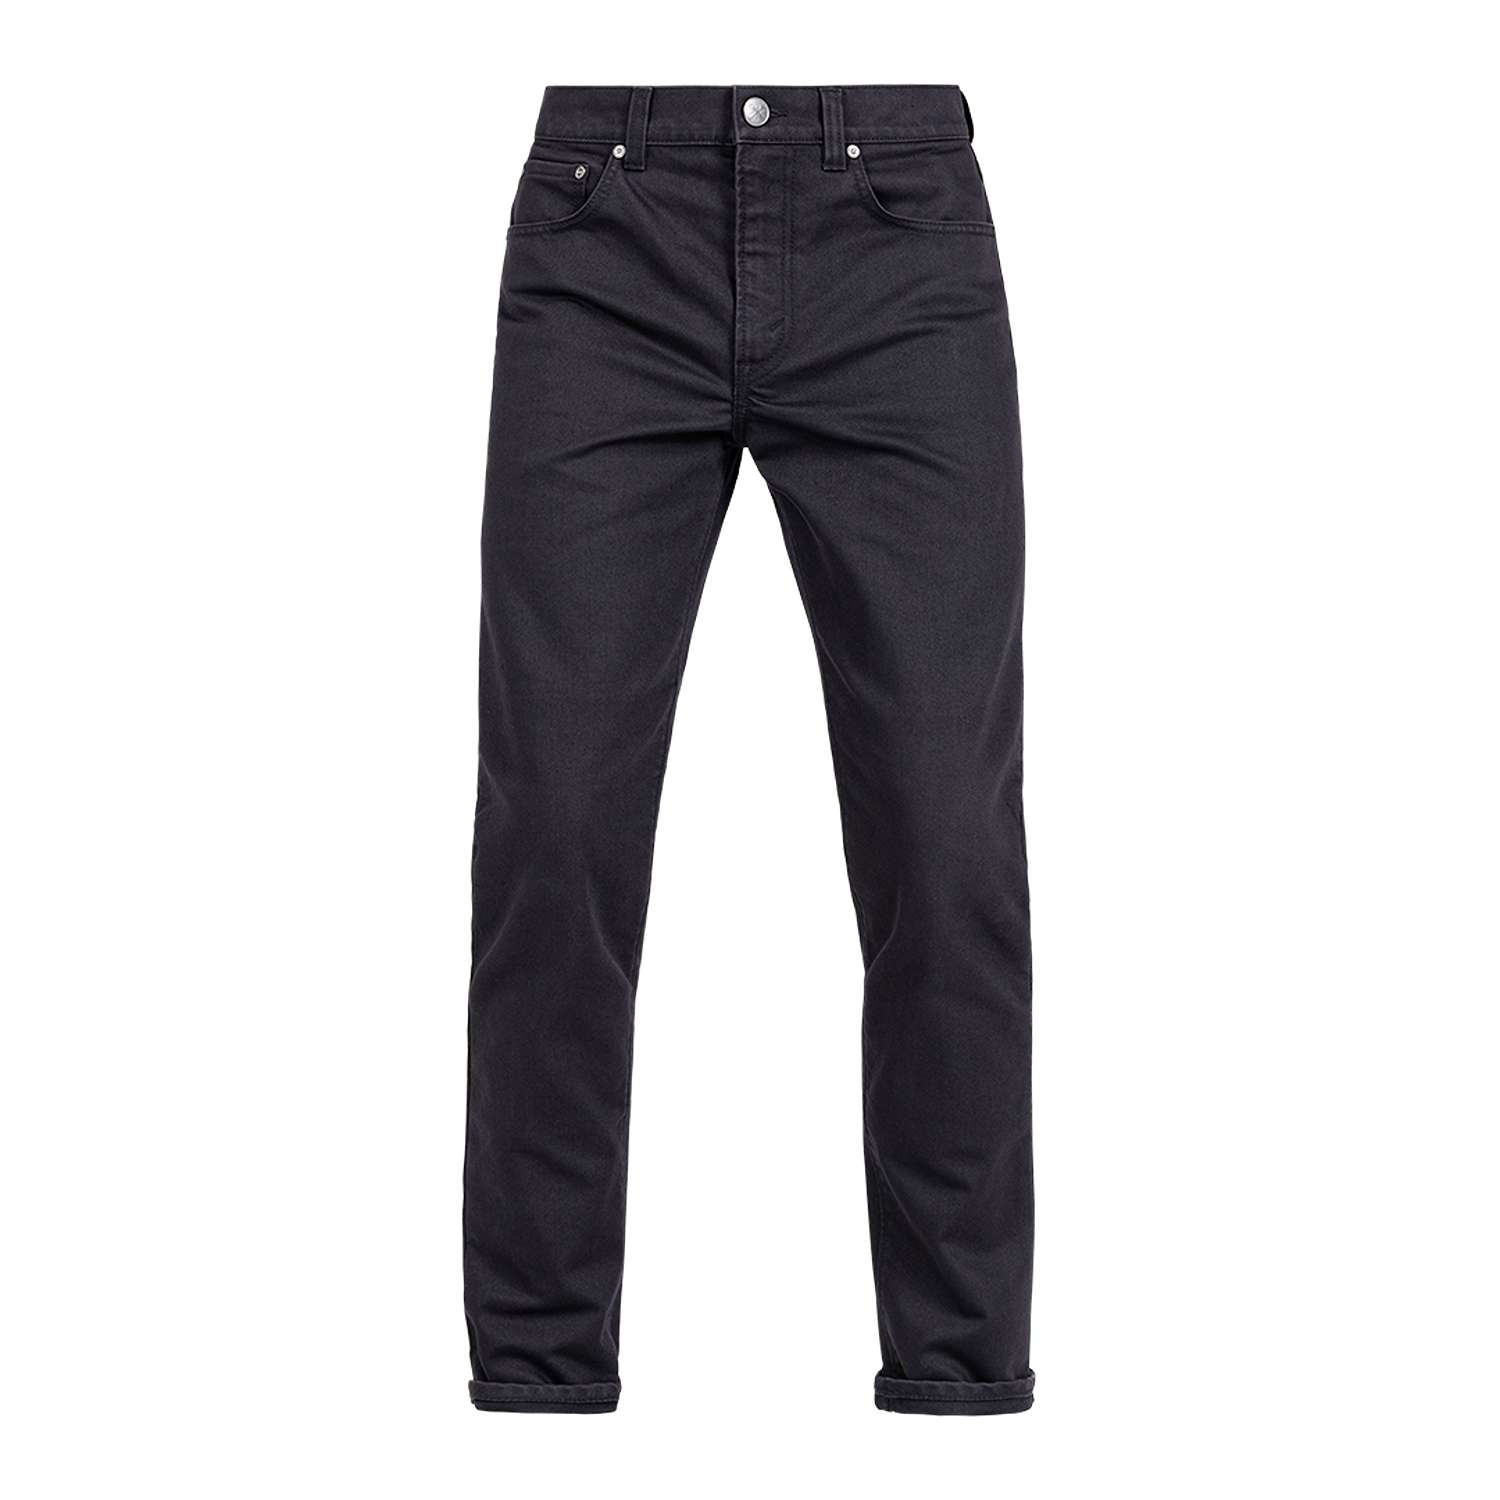 John Doe Classic Tapered Jeans Black Size W31/L32